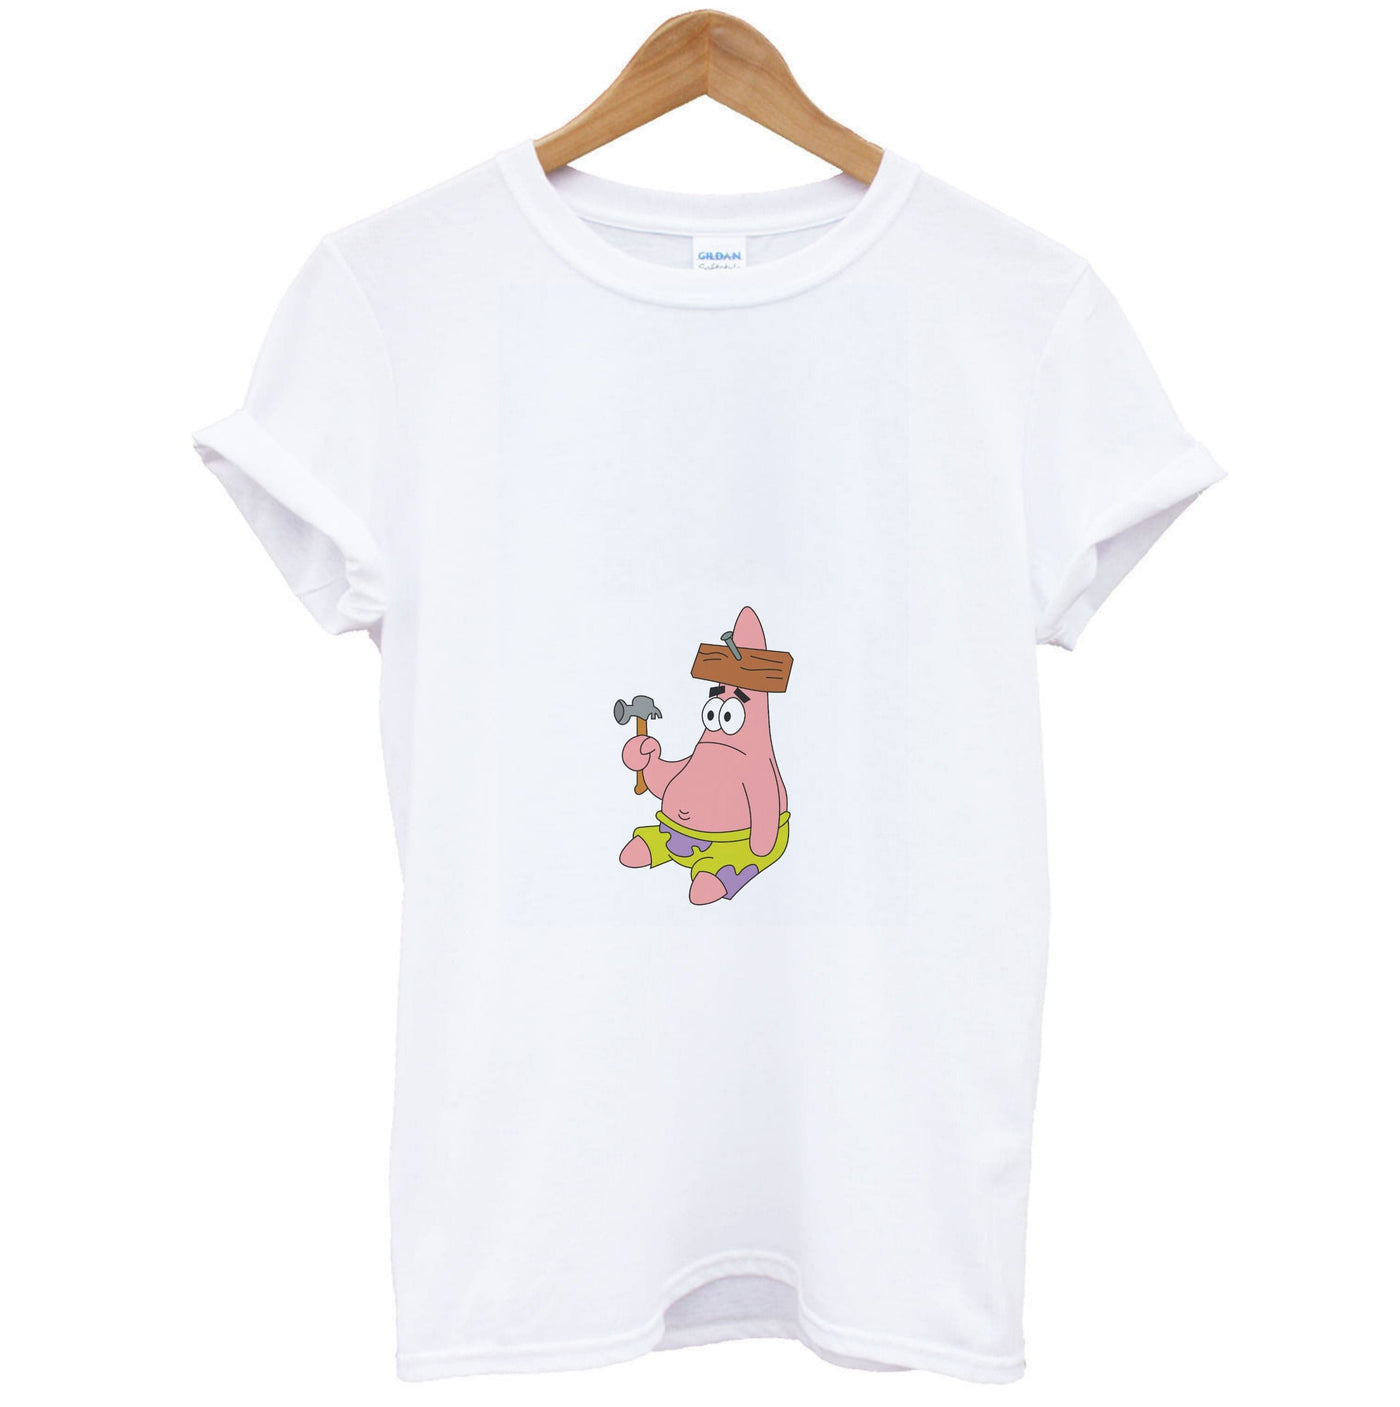 Nail Patrick - Spongebob T-Shirt